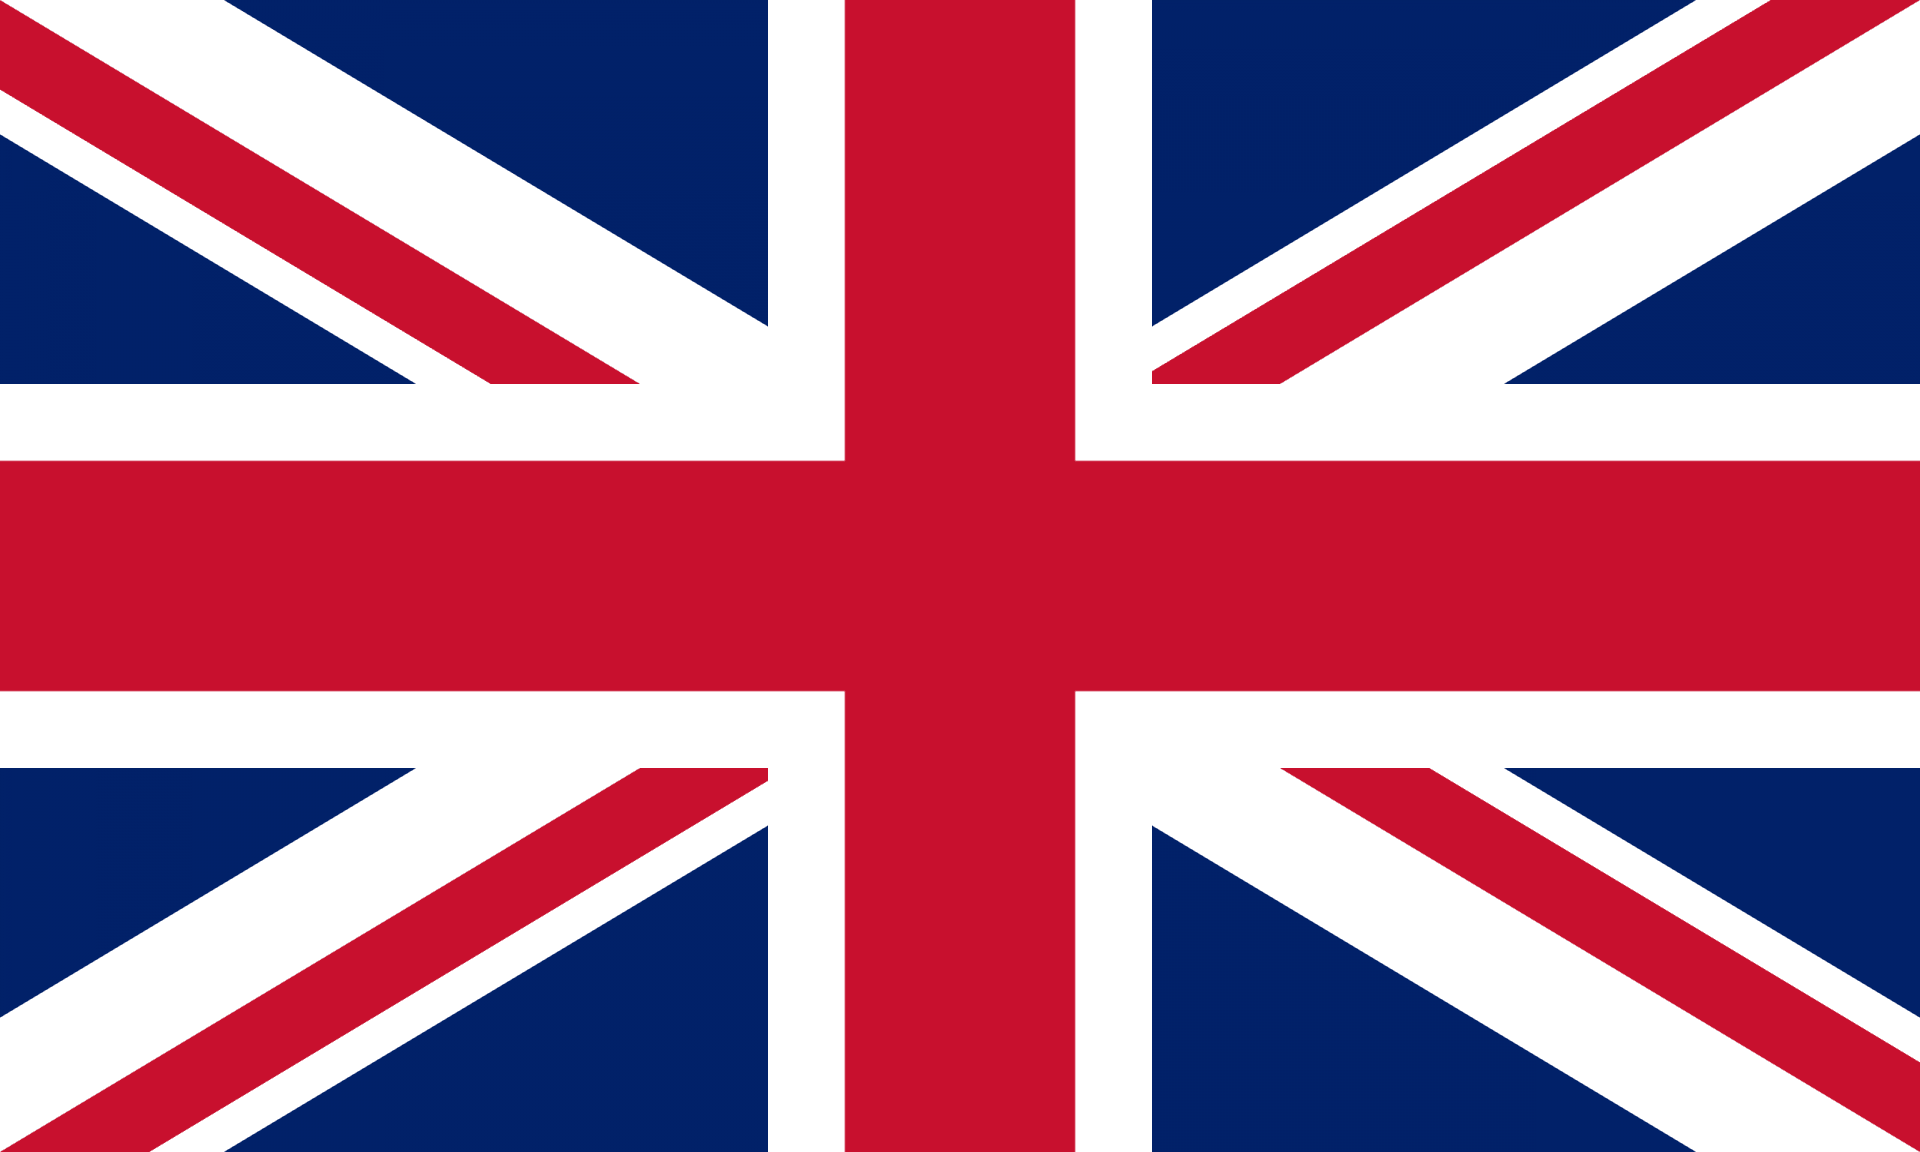 Storbritanniens flagga